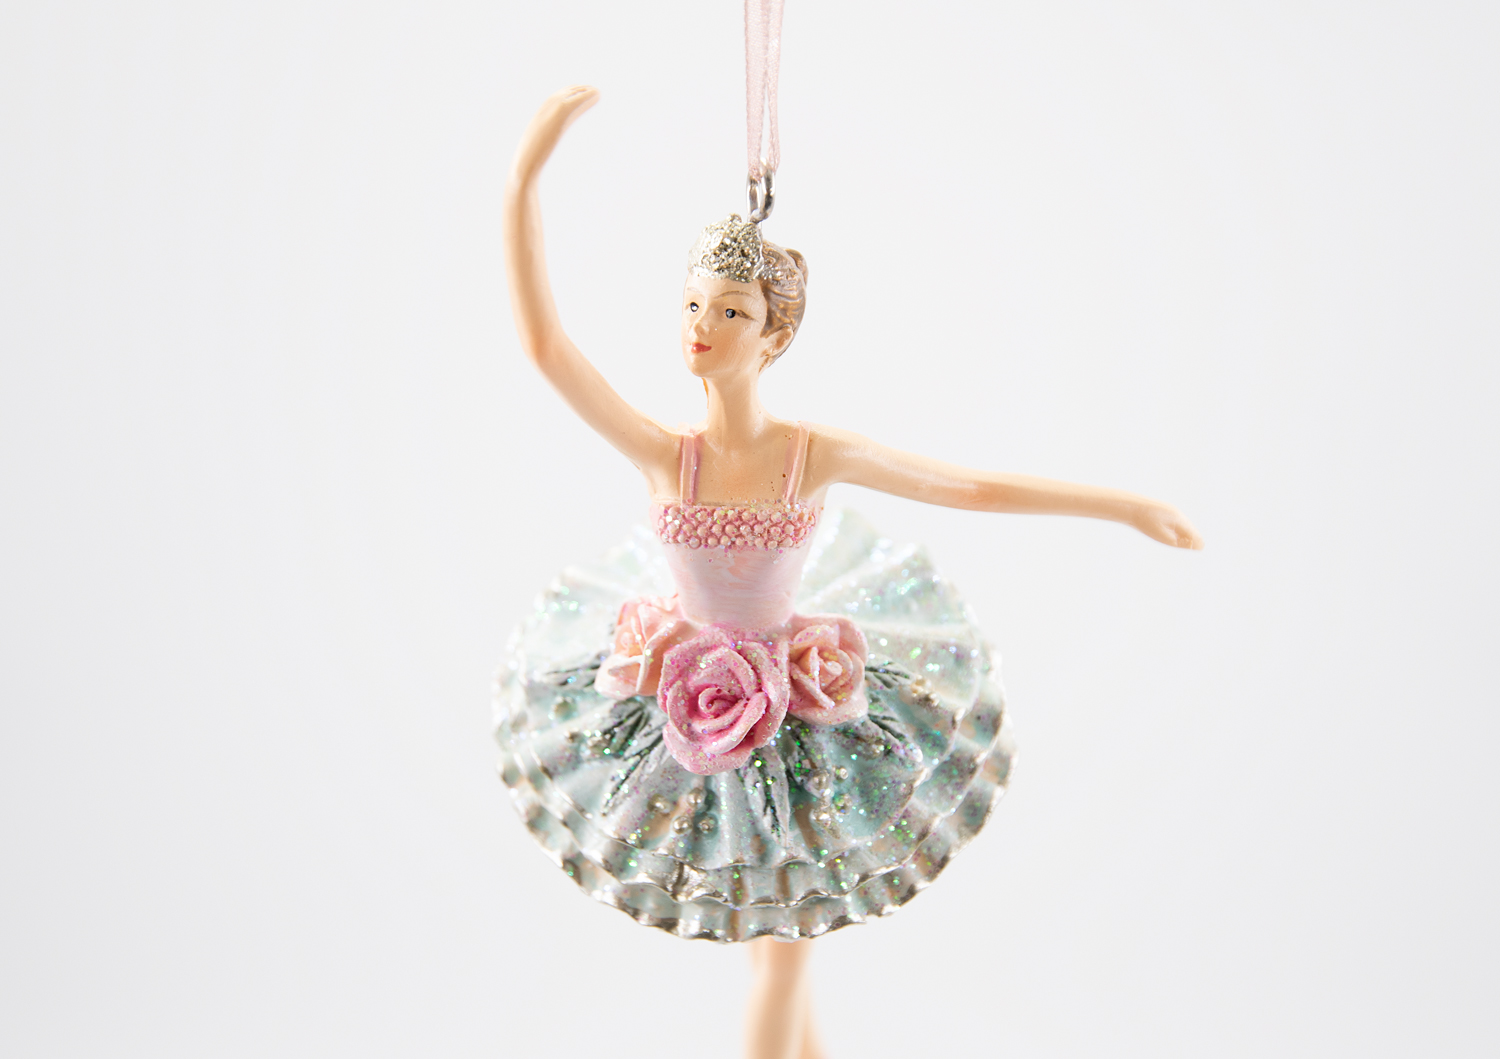 Gisela Graham Pastell Ballerina Weihnachtsschmuck